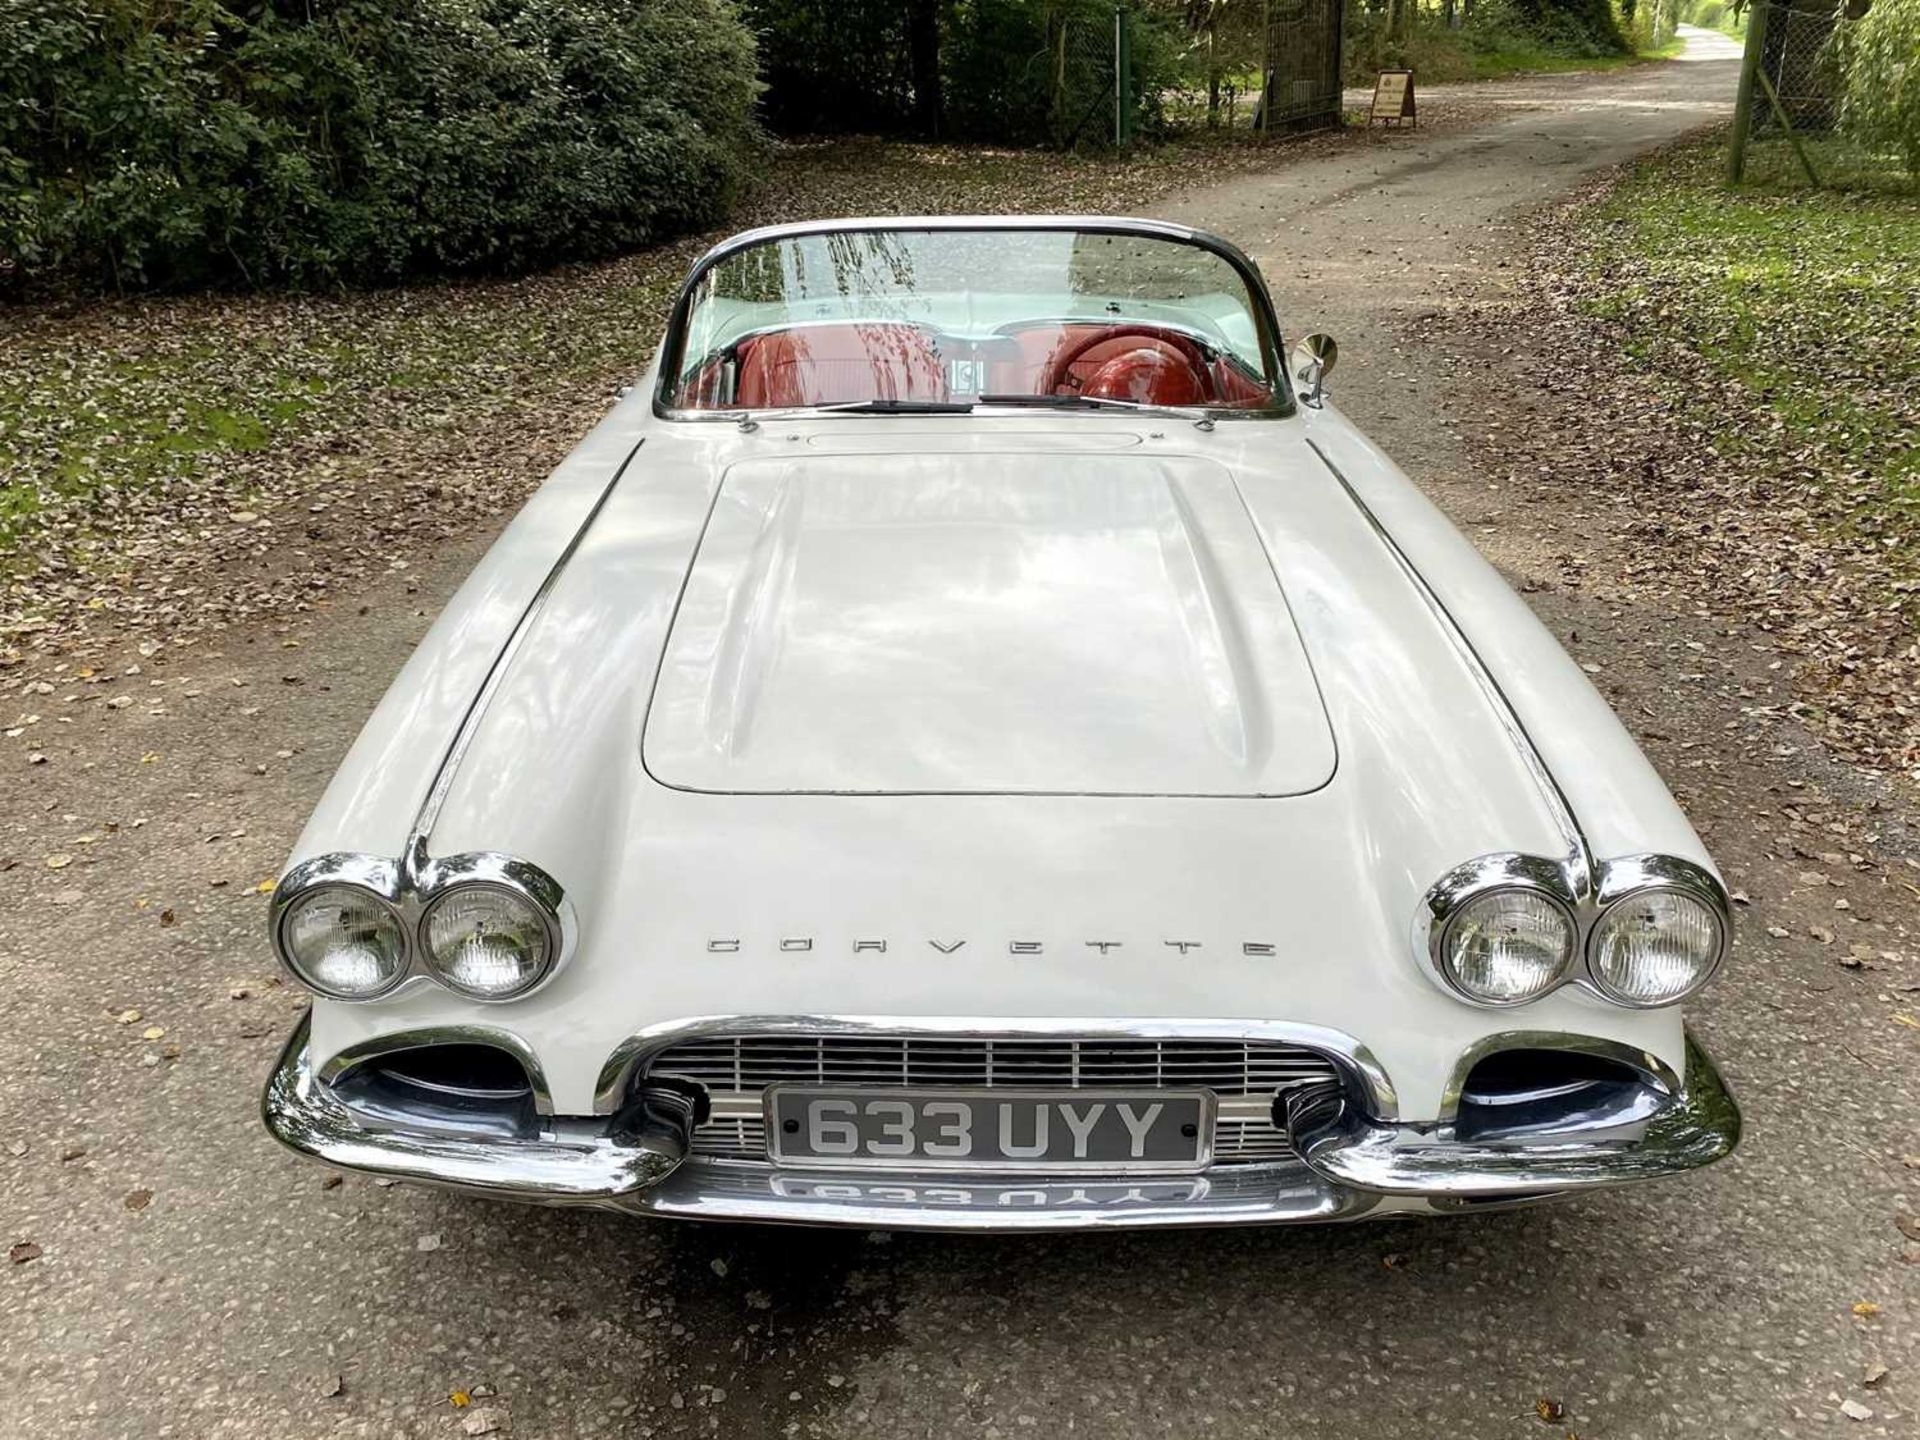 1961 Chevrolet Corvette Engine upgraded to a 5.4L V8 - Image 23 of 95